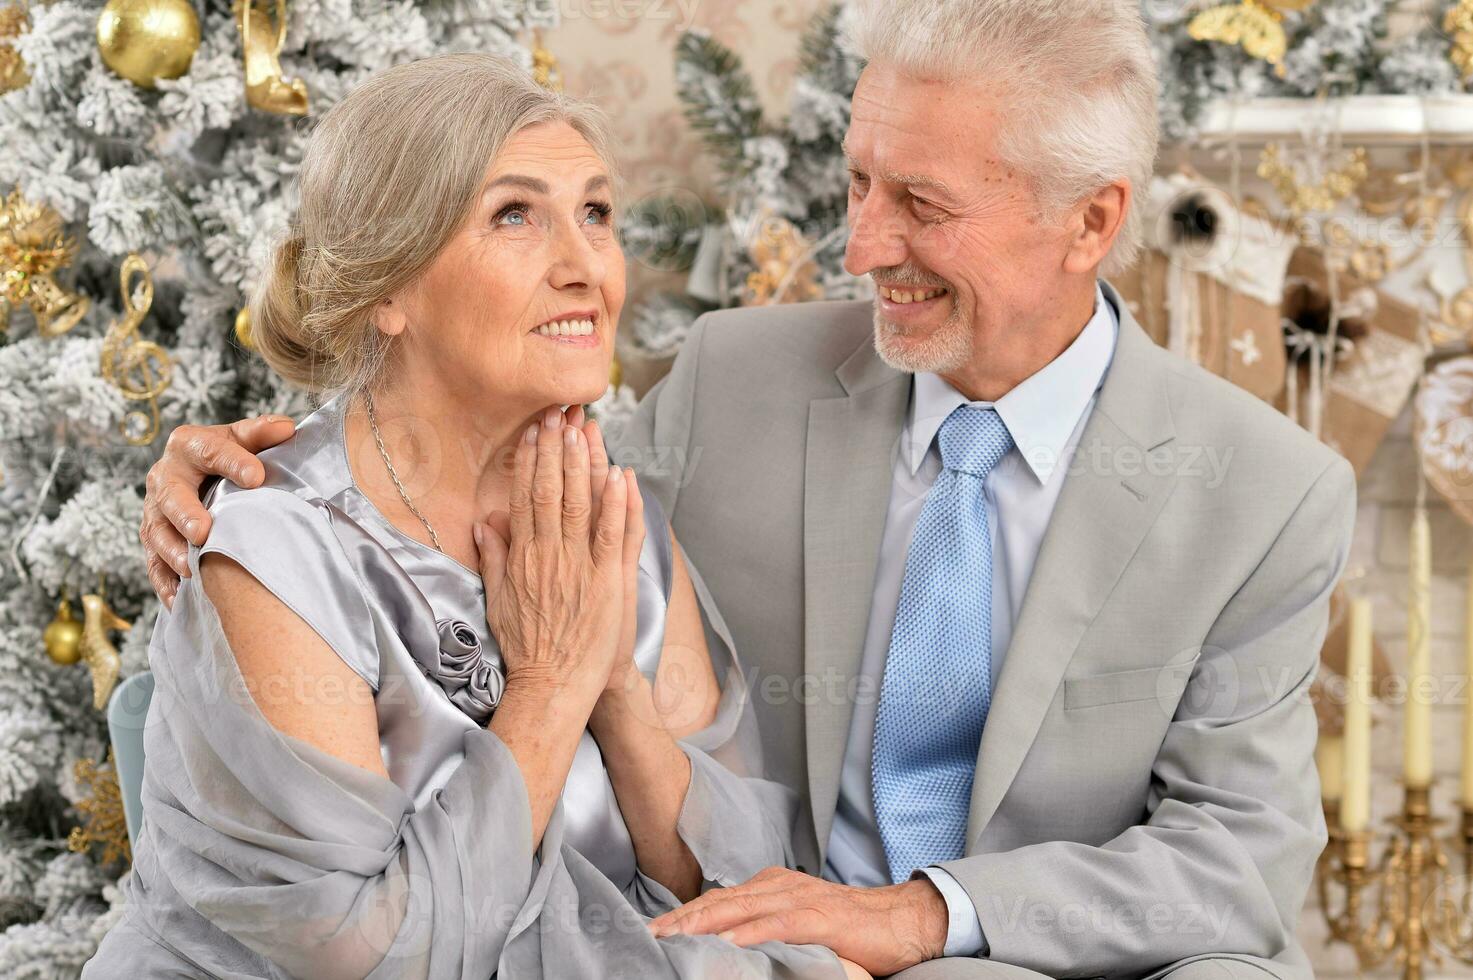 Hugging senior couple smile on blurred background photo